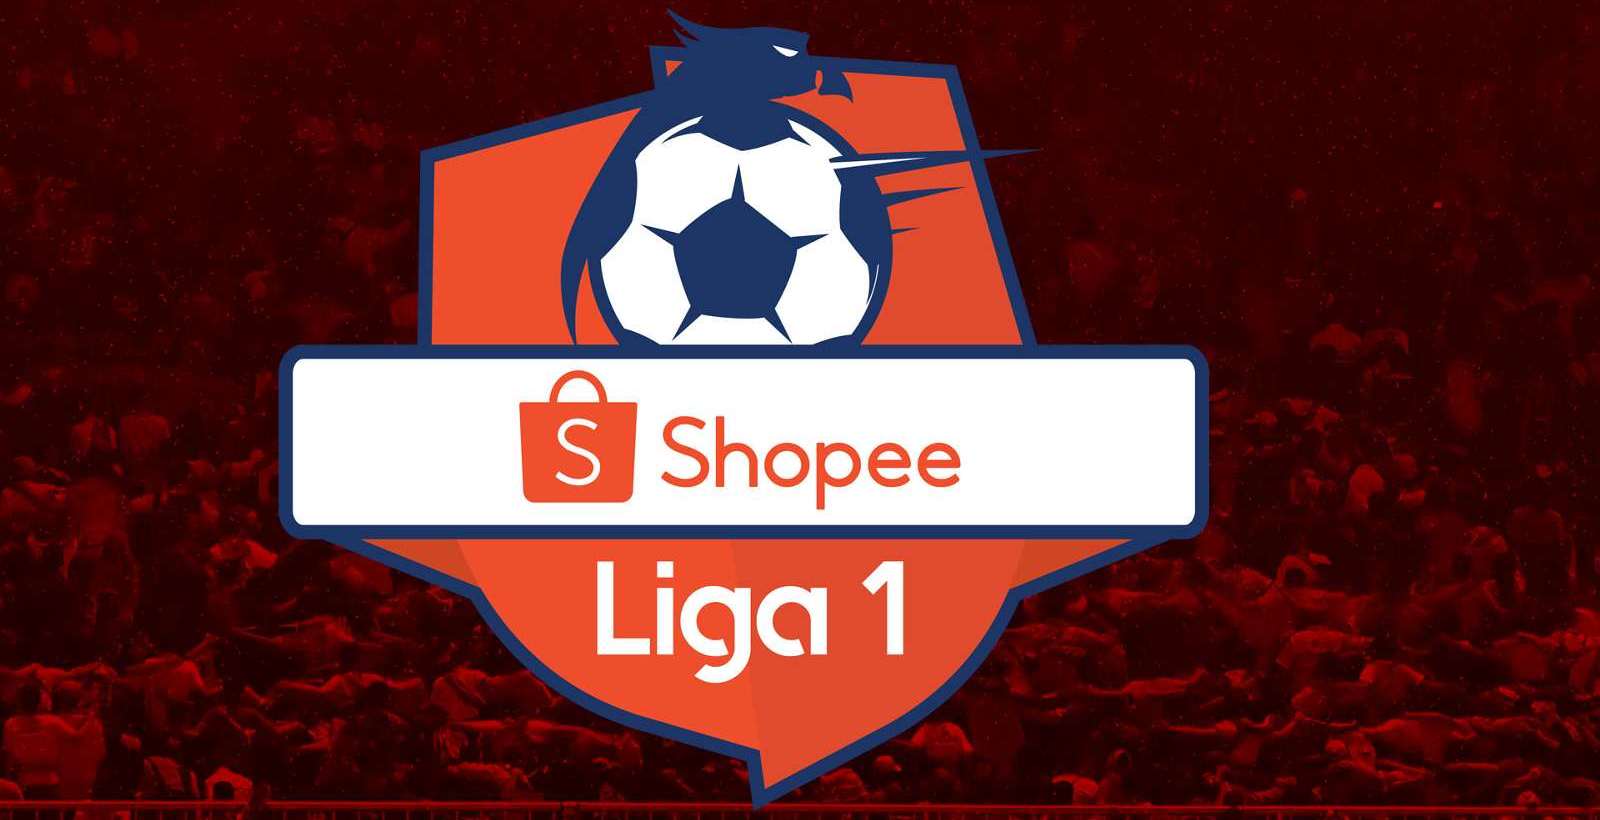 Jadwal Lengkap Shopee Liga 1 2019